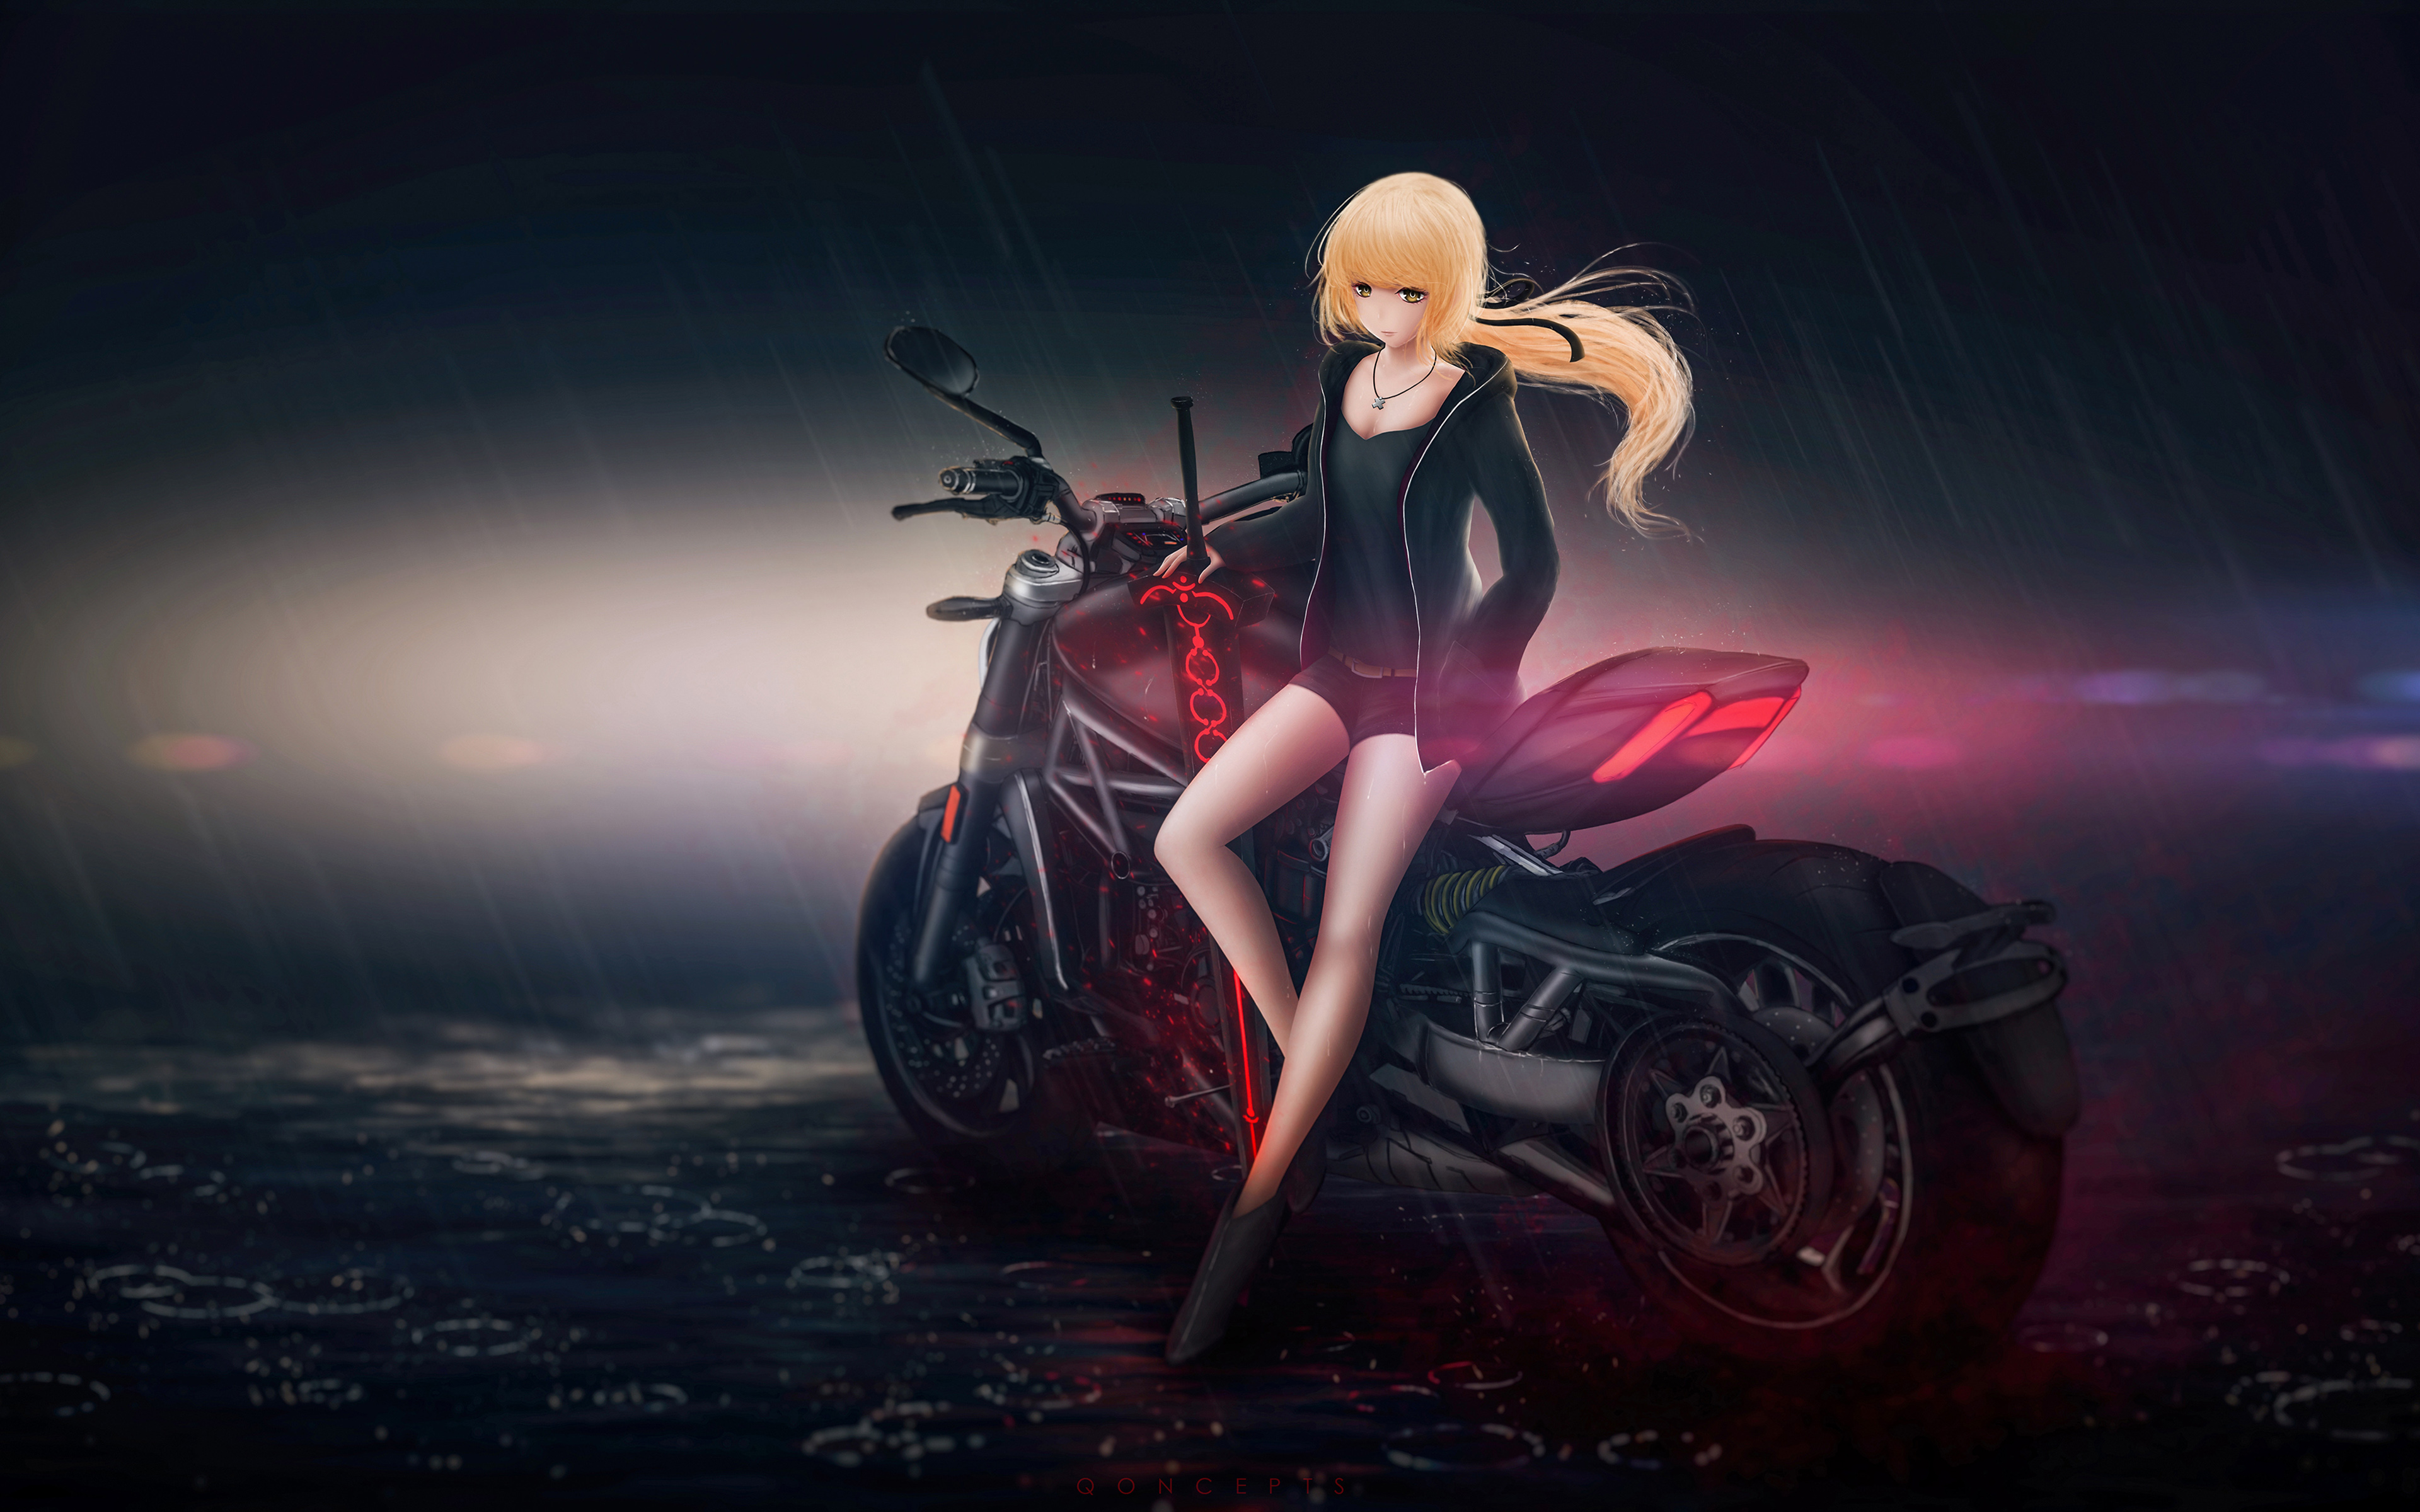 Premium AI Image | Fantastic anime girl on a motorcycle